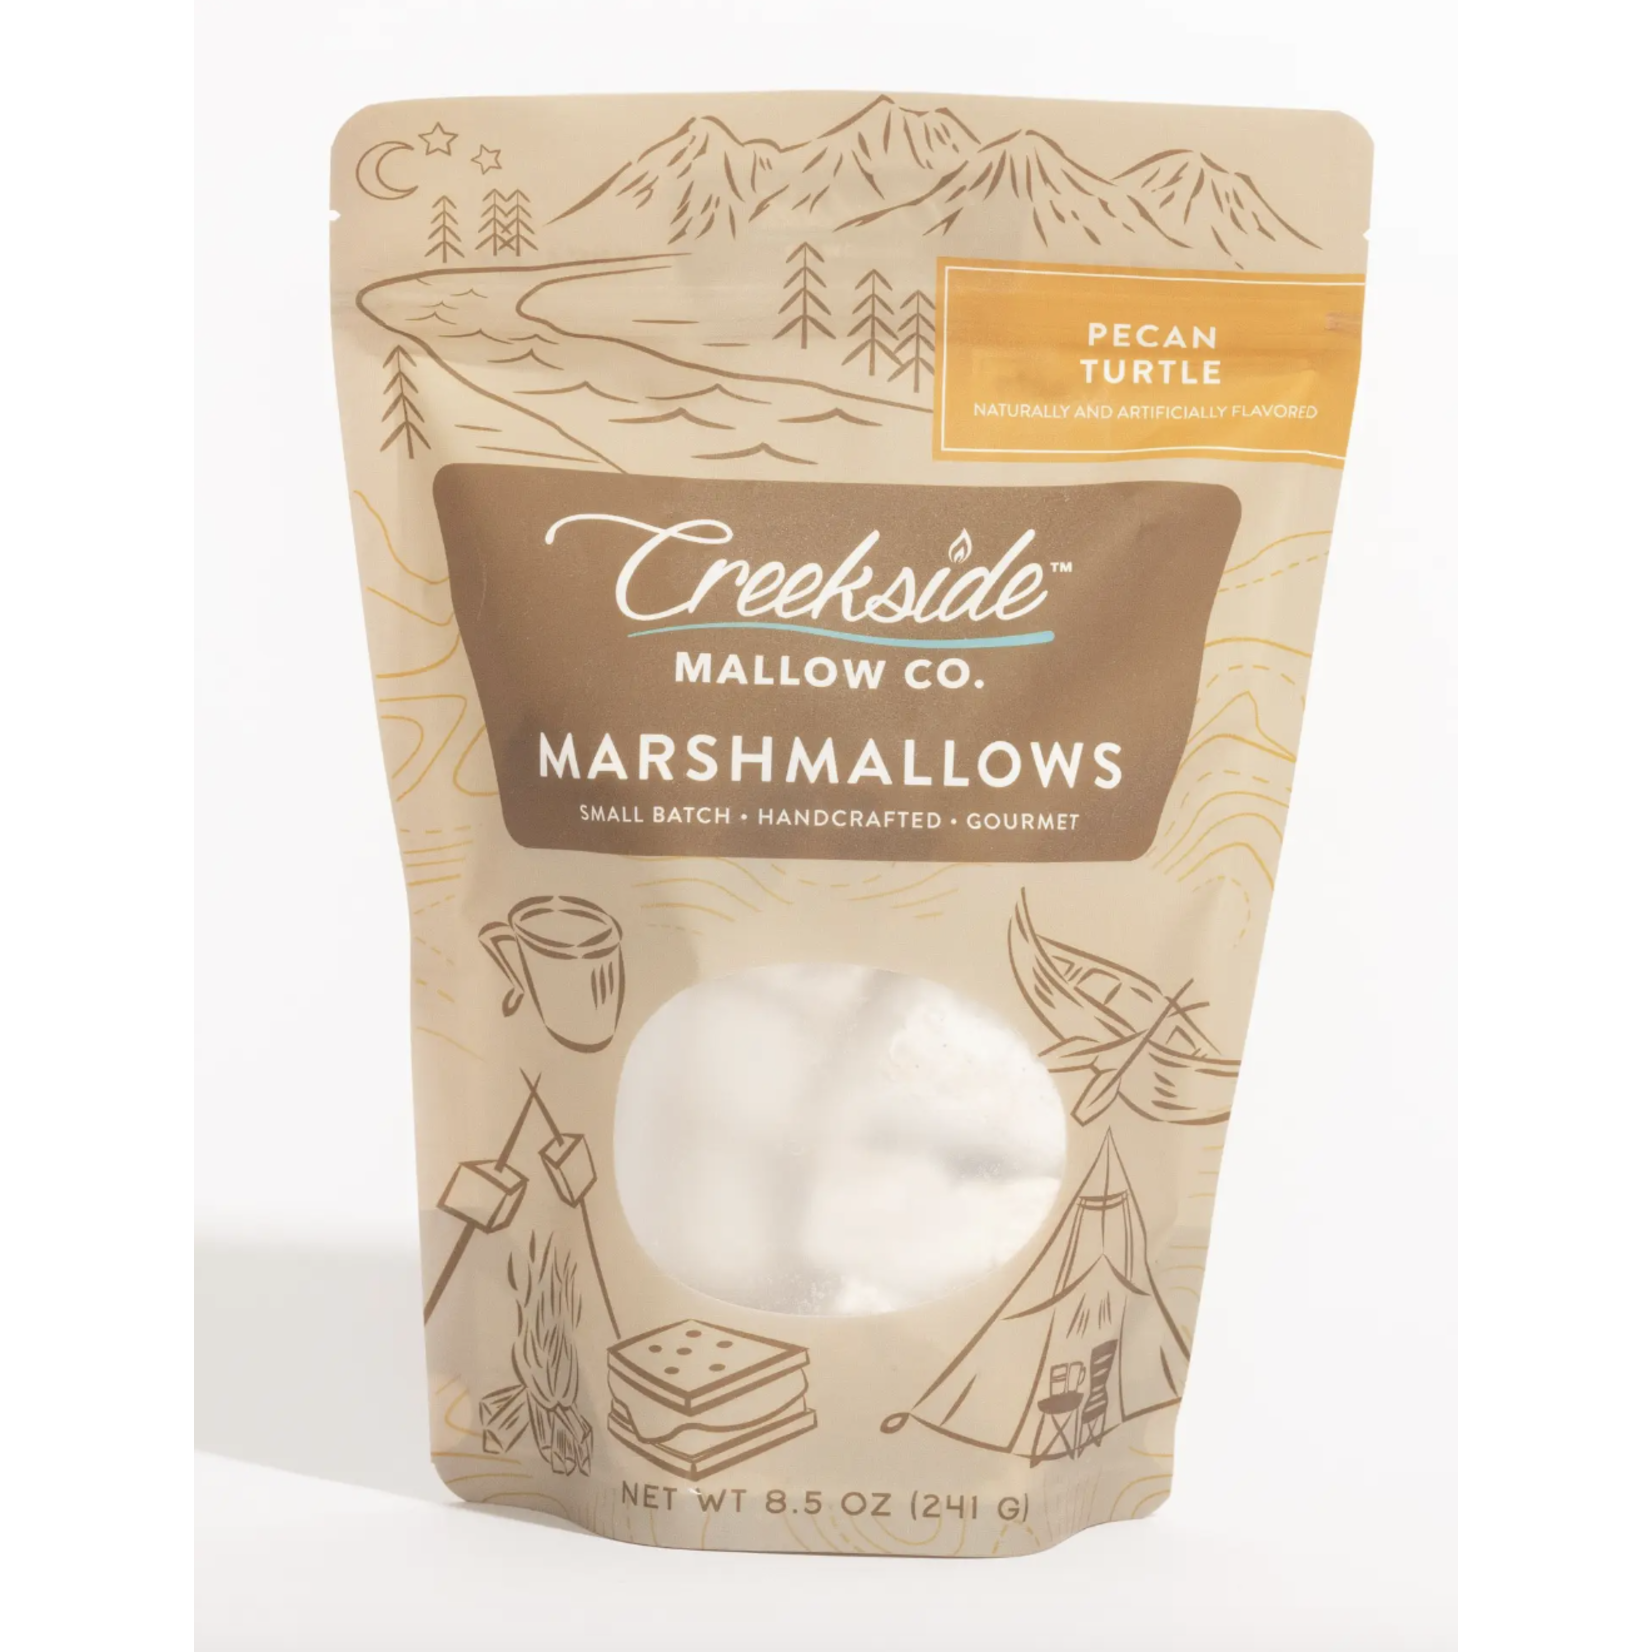 Creekside Mallow Co. / Fireside Mallow Co. Pecan Turtle Marshmallow Bag